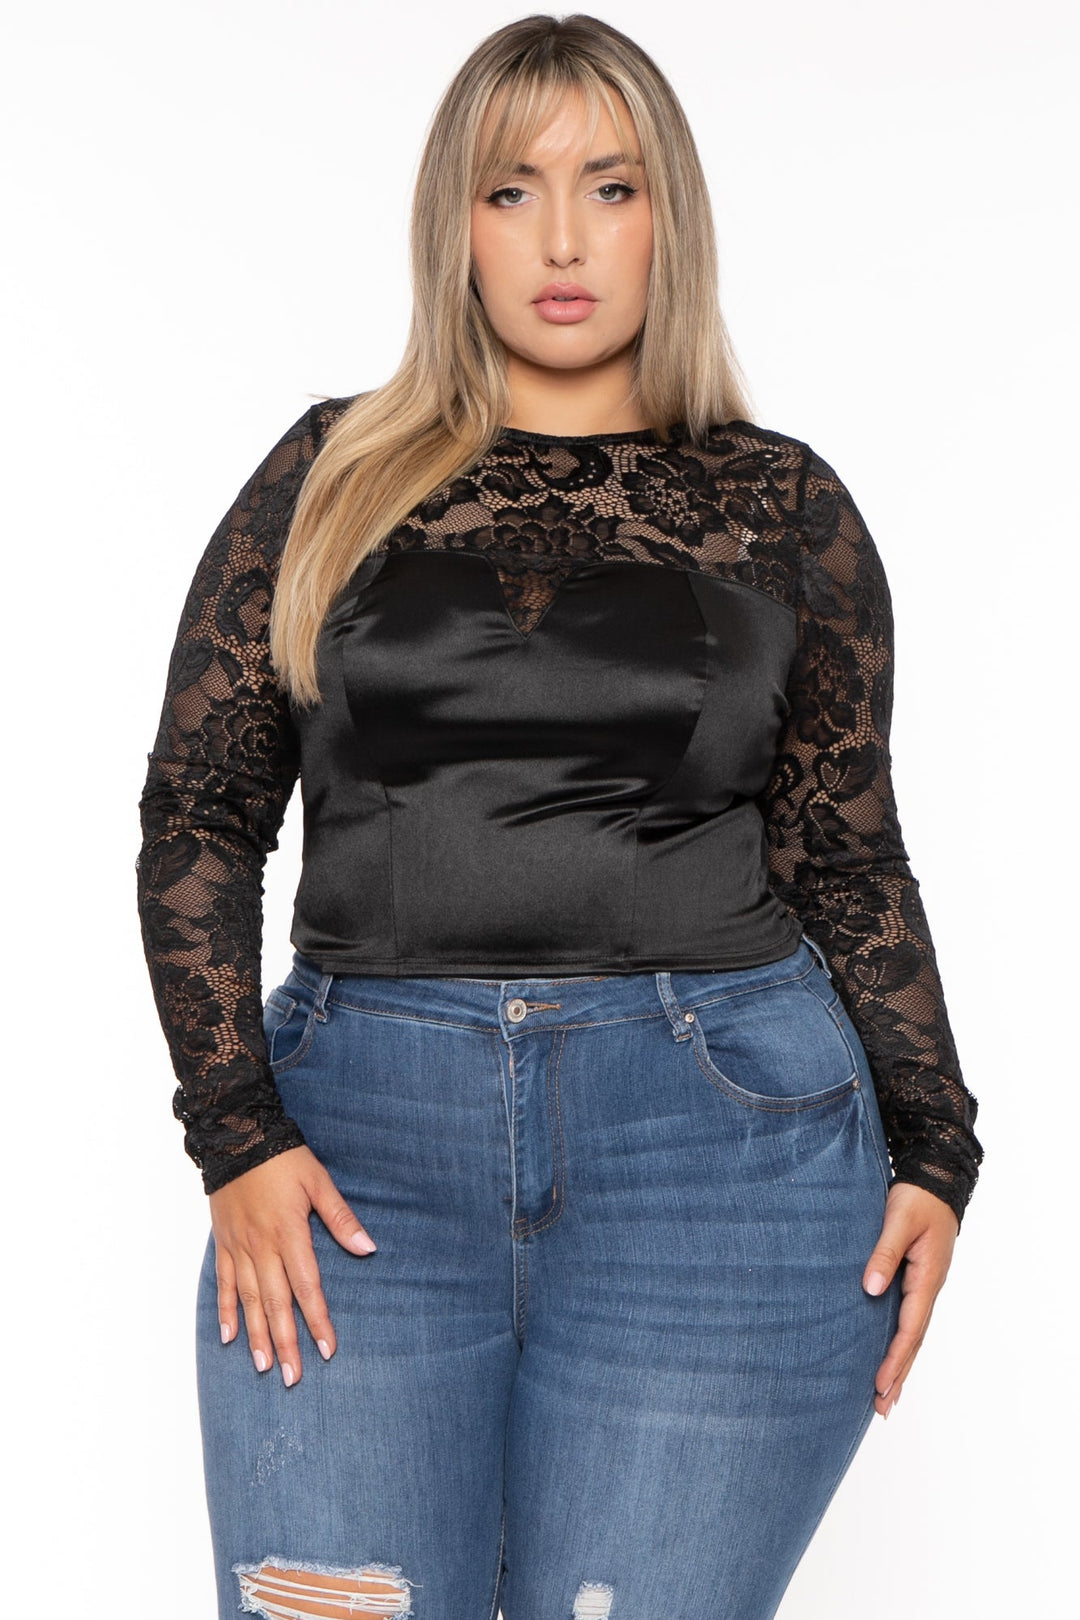 Plus Size Leisa Lace Top- Black – Curvy Sense